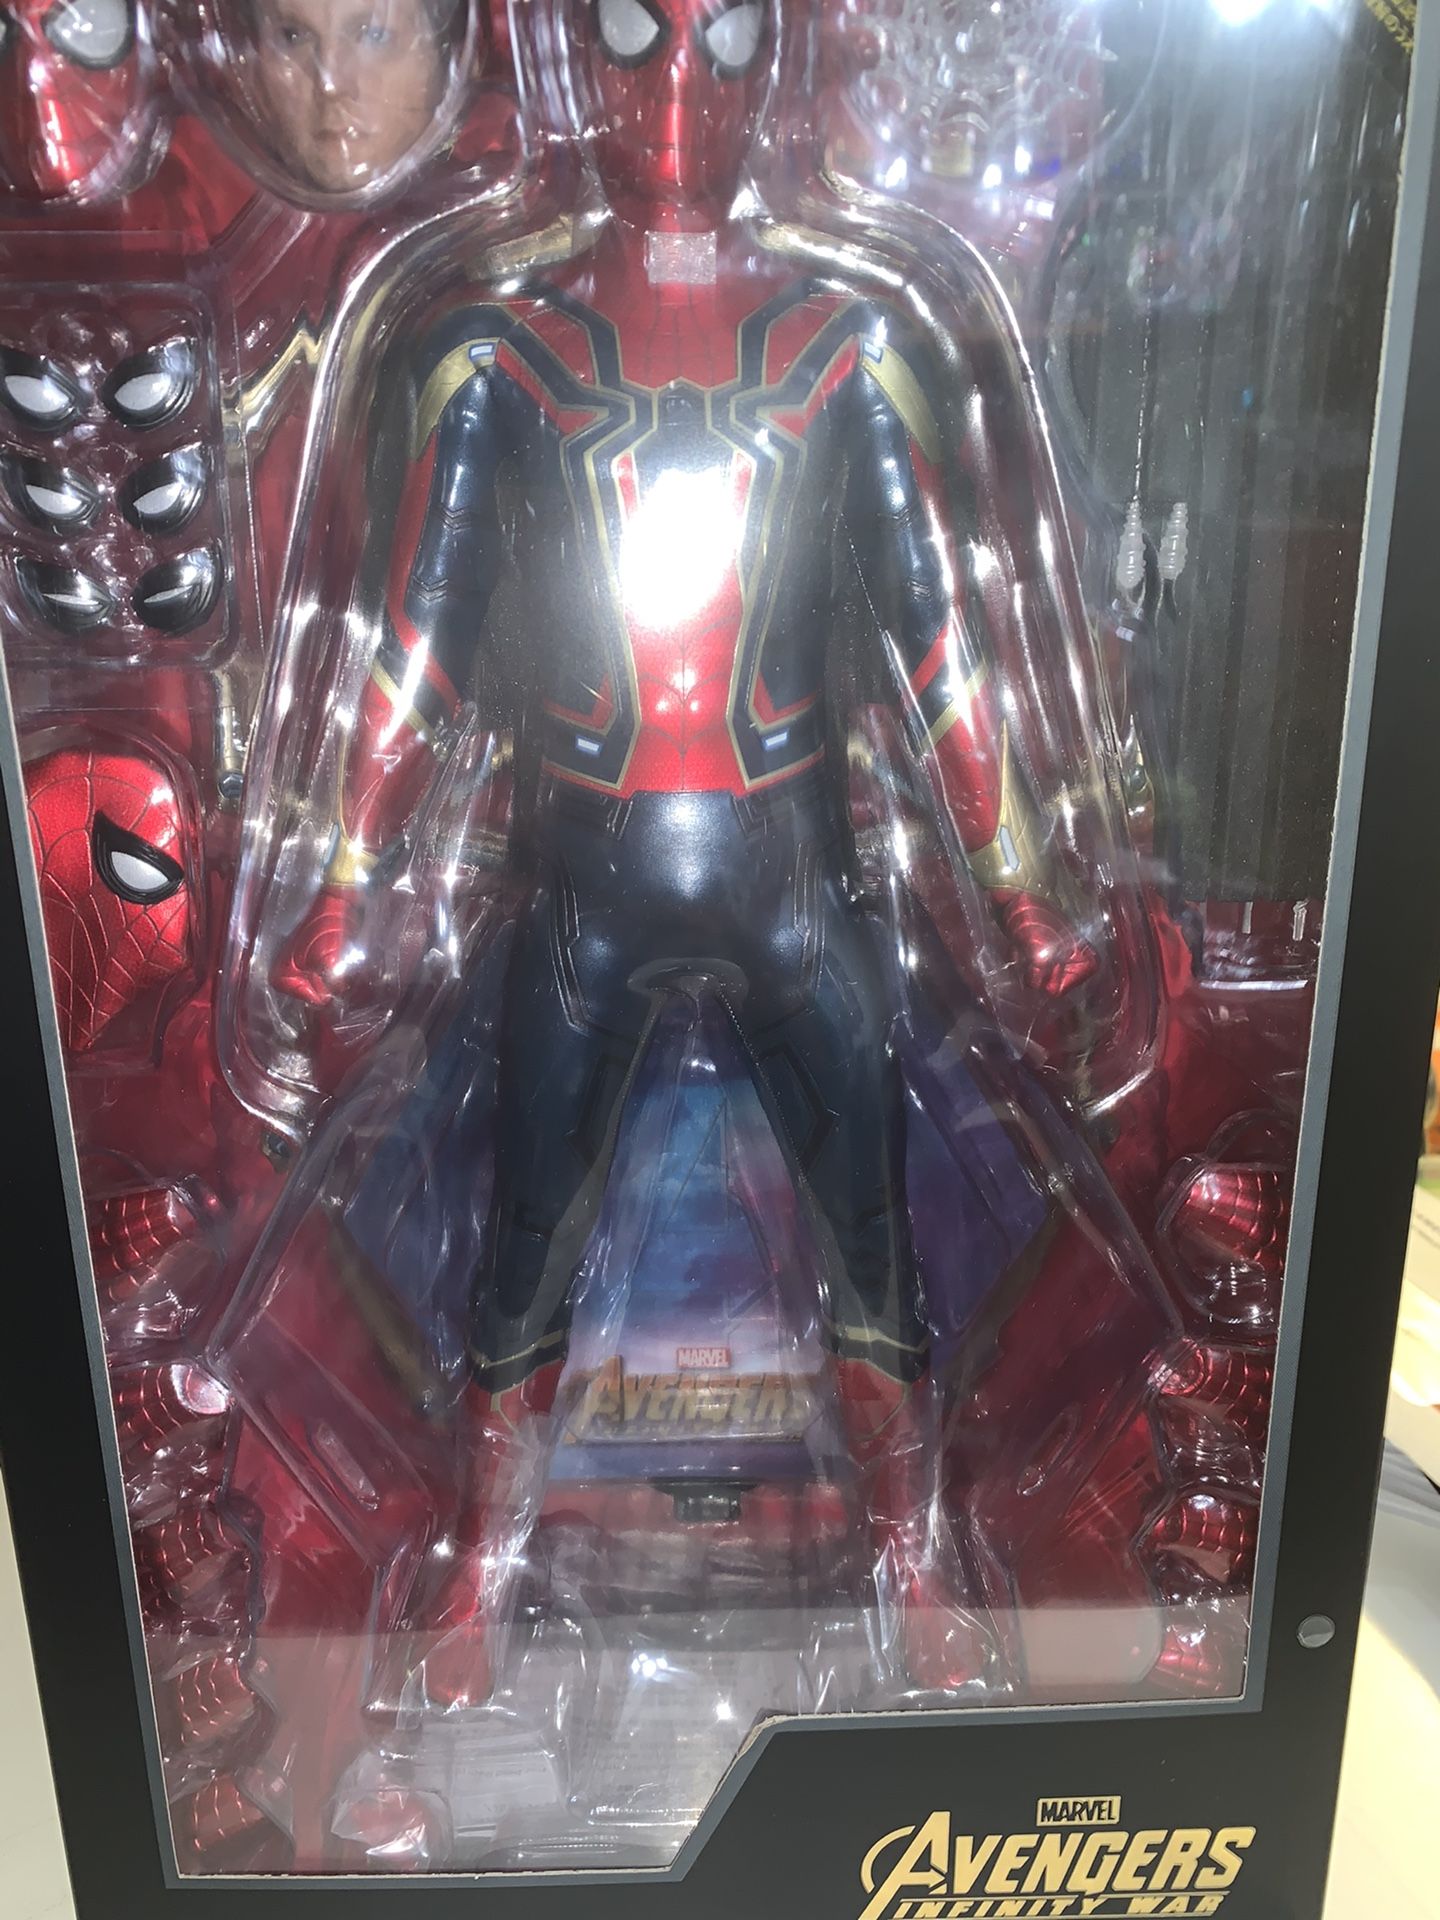 Hot toys iron spider avengers infinity war Disney marvel